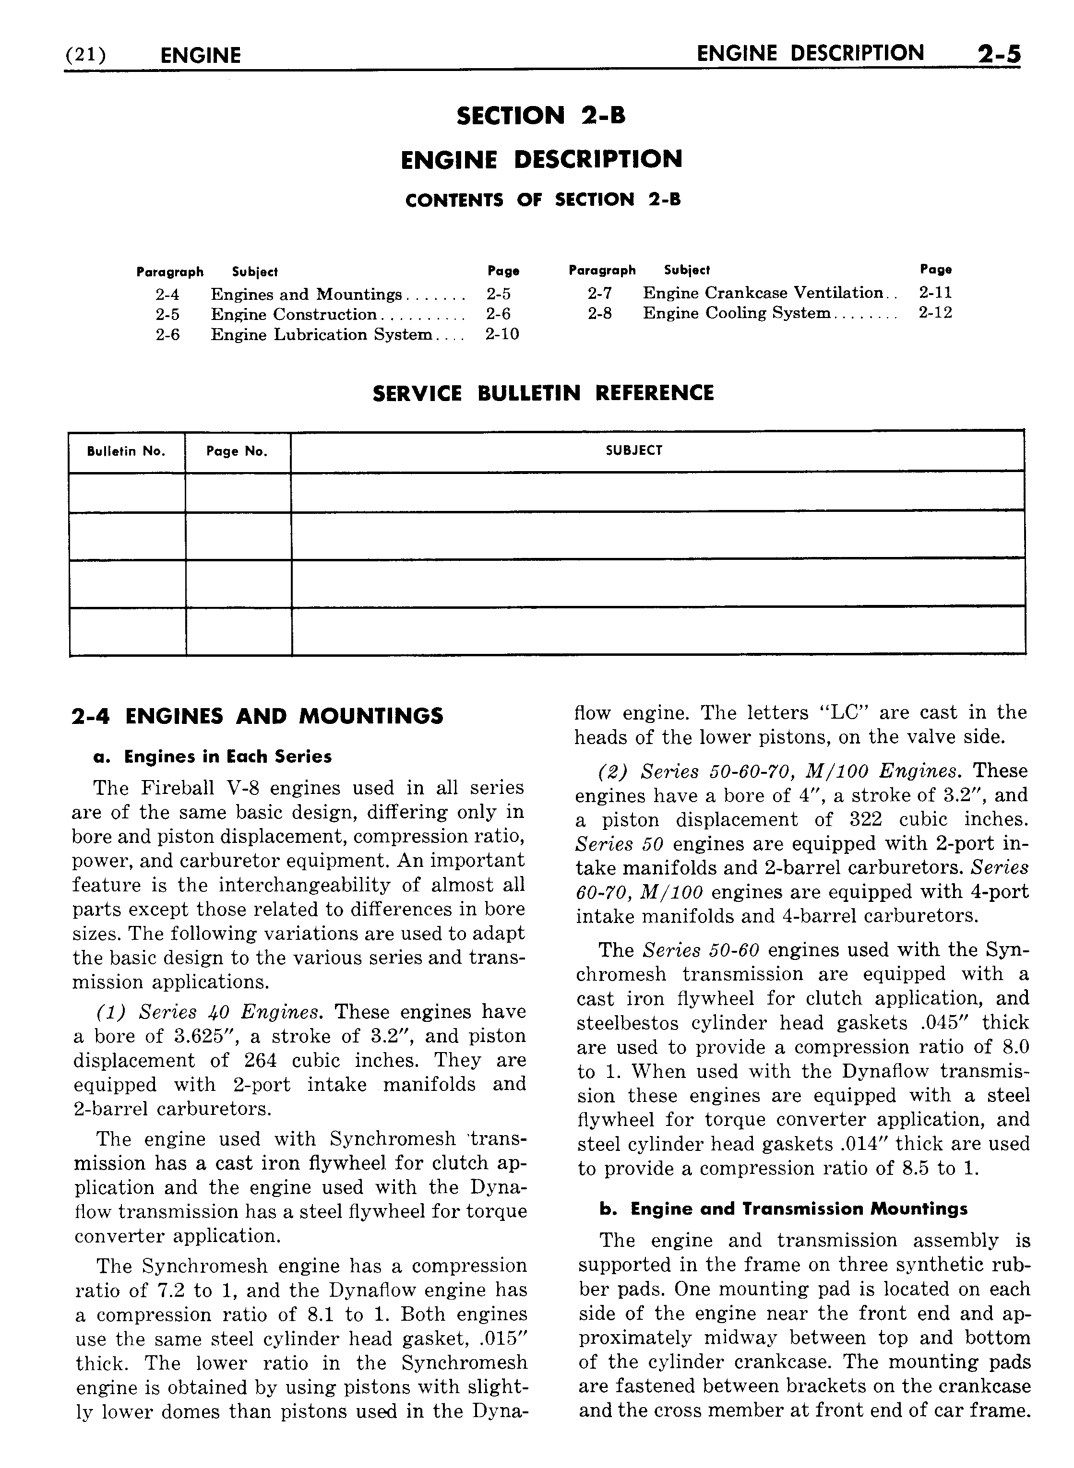 n_03 1954 Buick Shop Manual - Engine-005-005.jpg